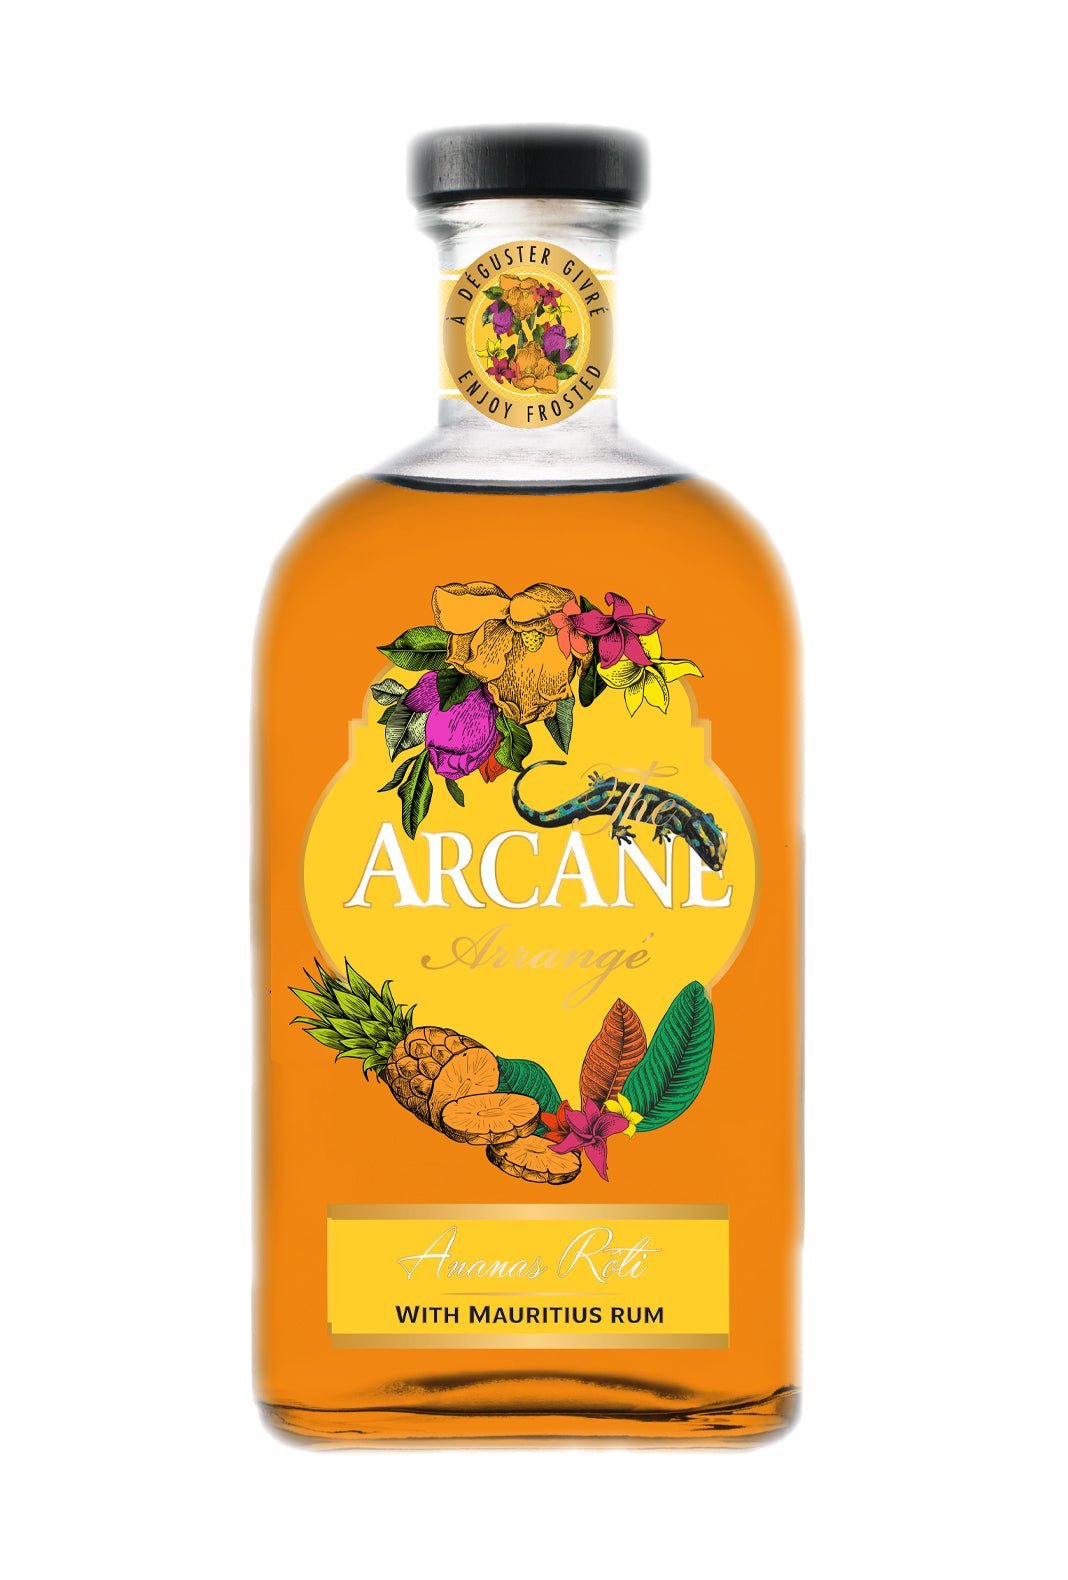 Arcane Rum Arrange Pineapple 40% 700ml | Rum | Shop online at Spirits of France